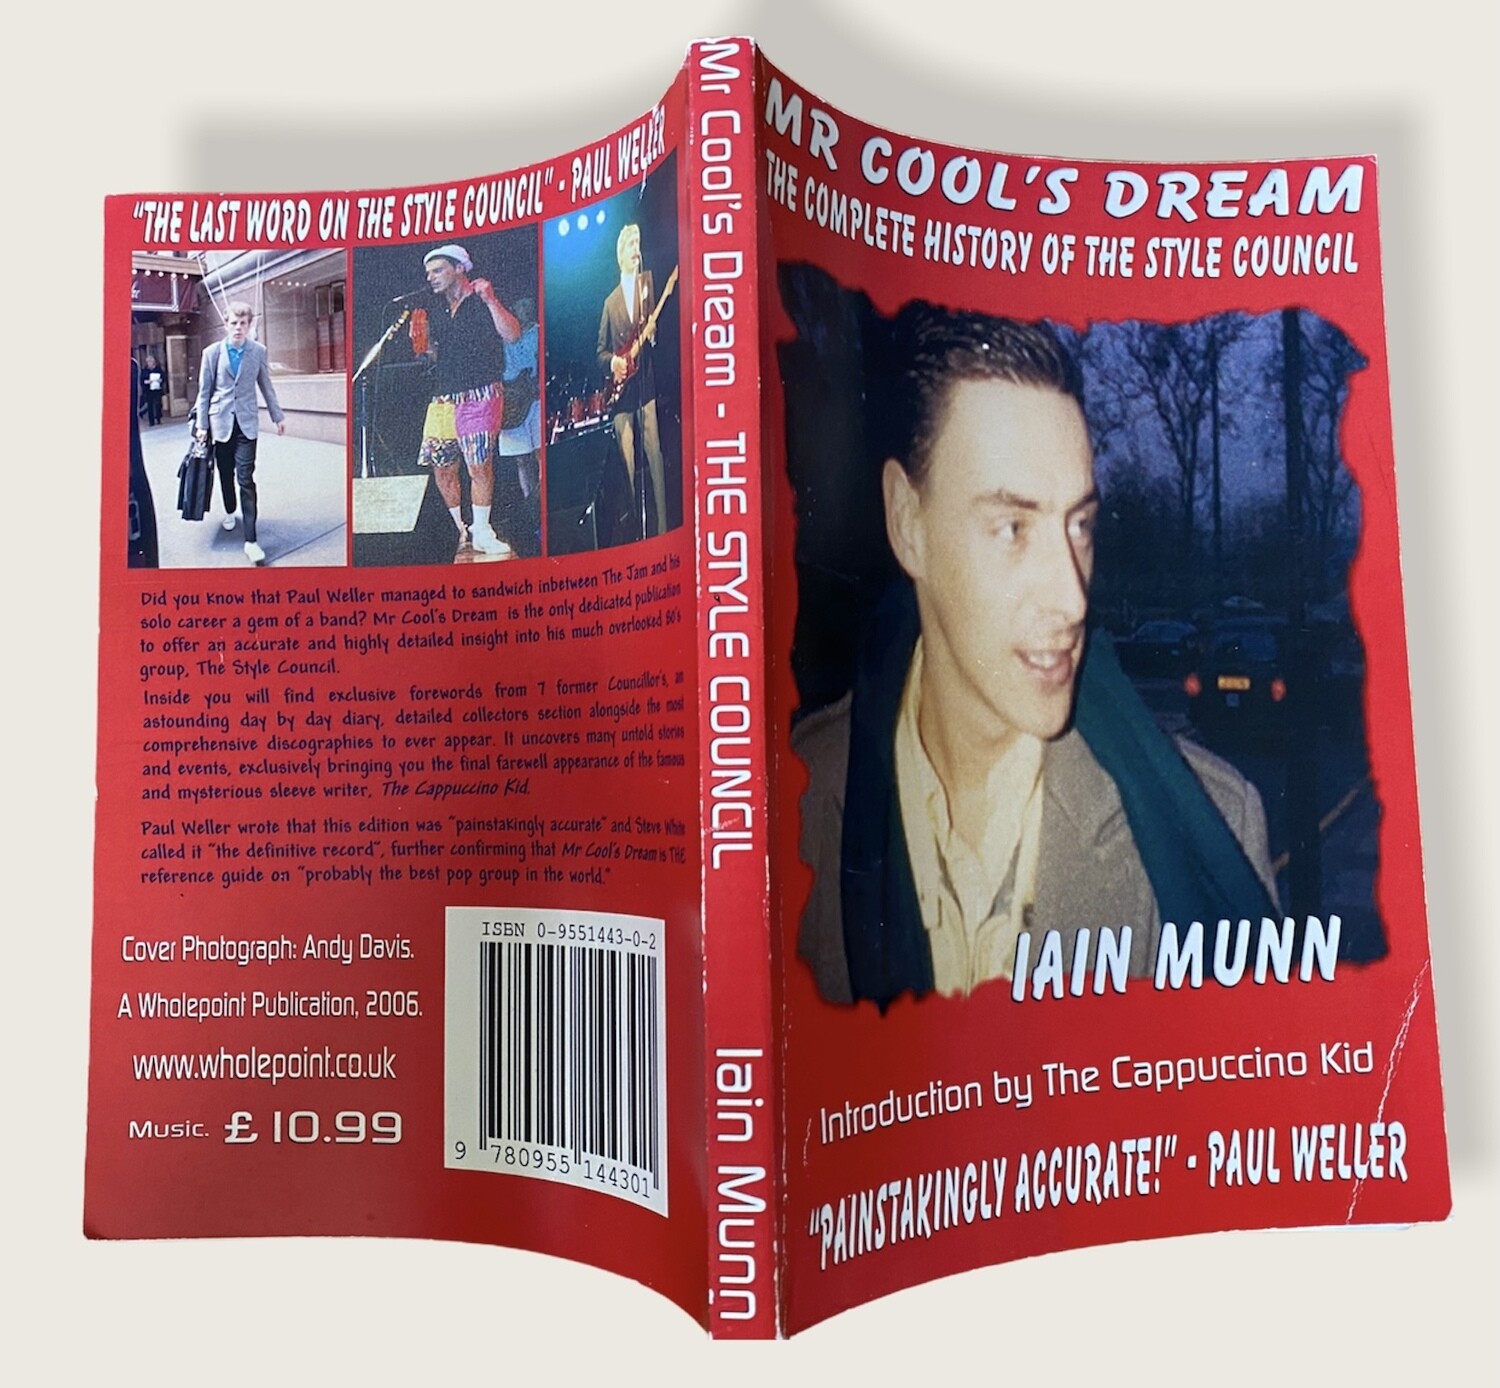 Mr Cools Dream (2006 paperback)